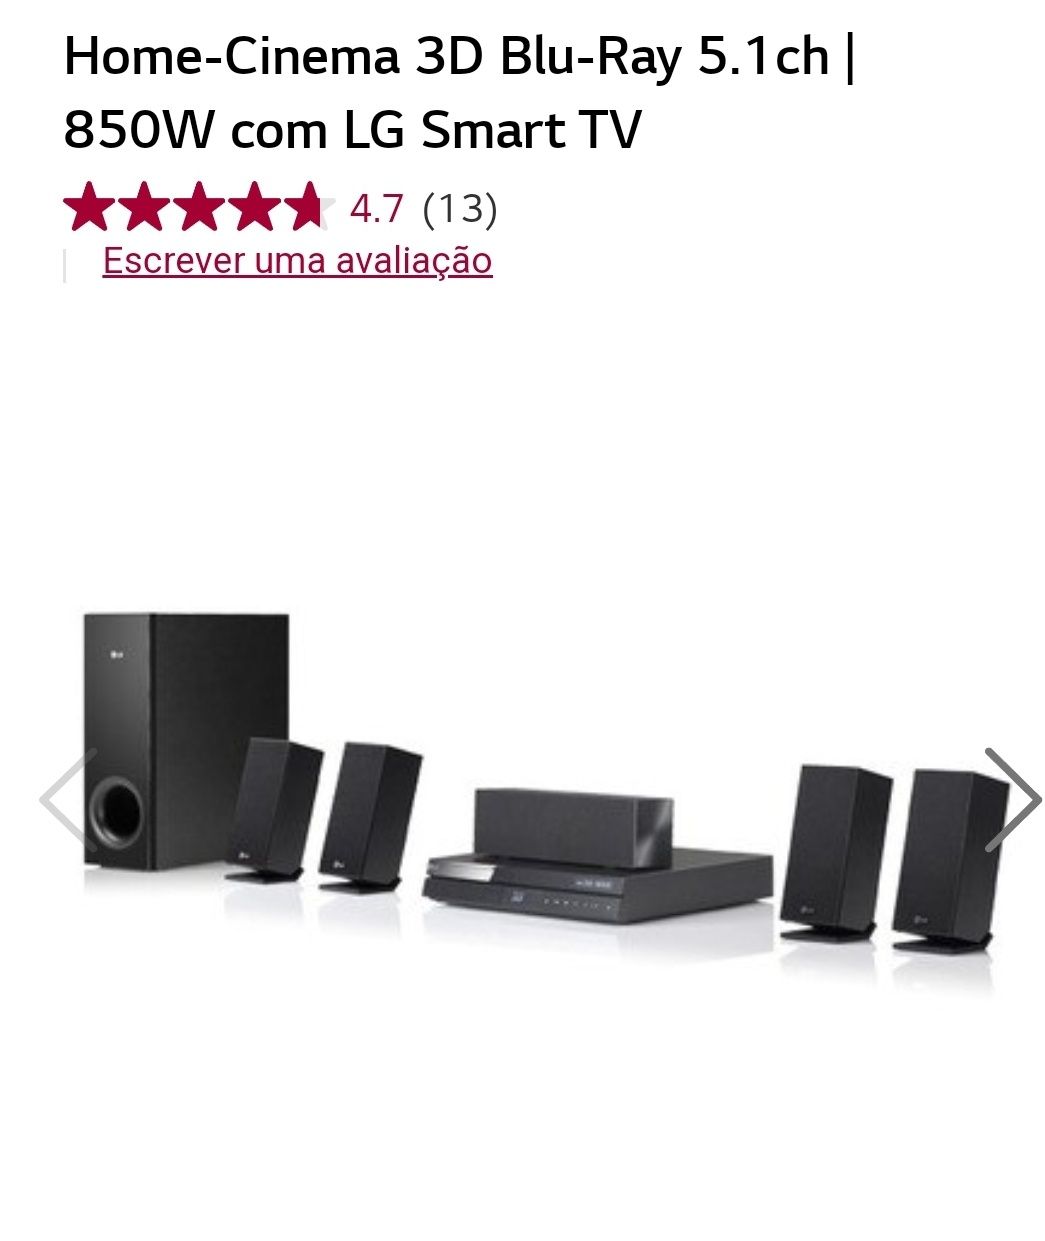 Home-Cinema LG SMART TV 850W